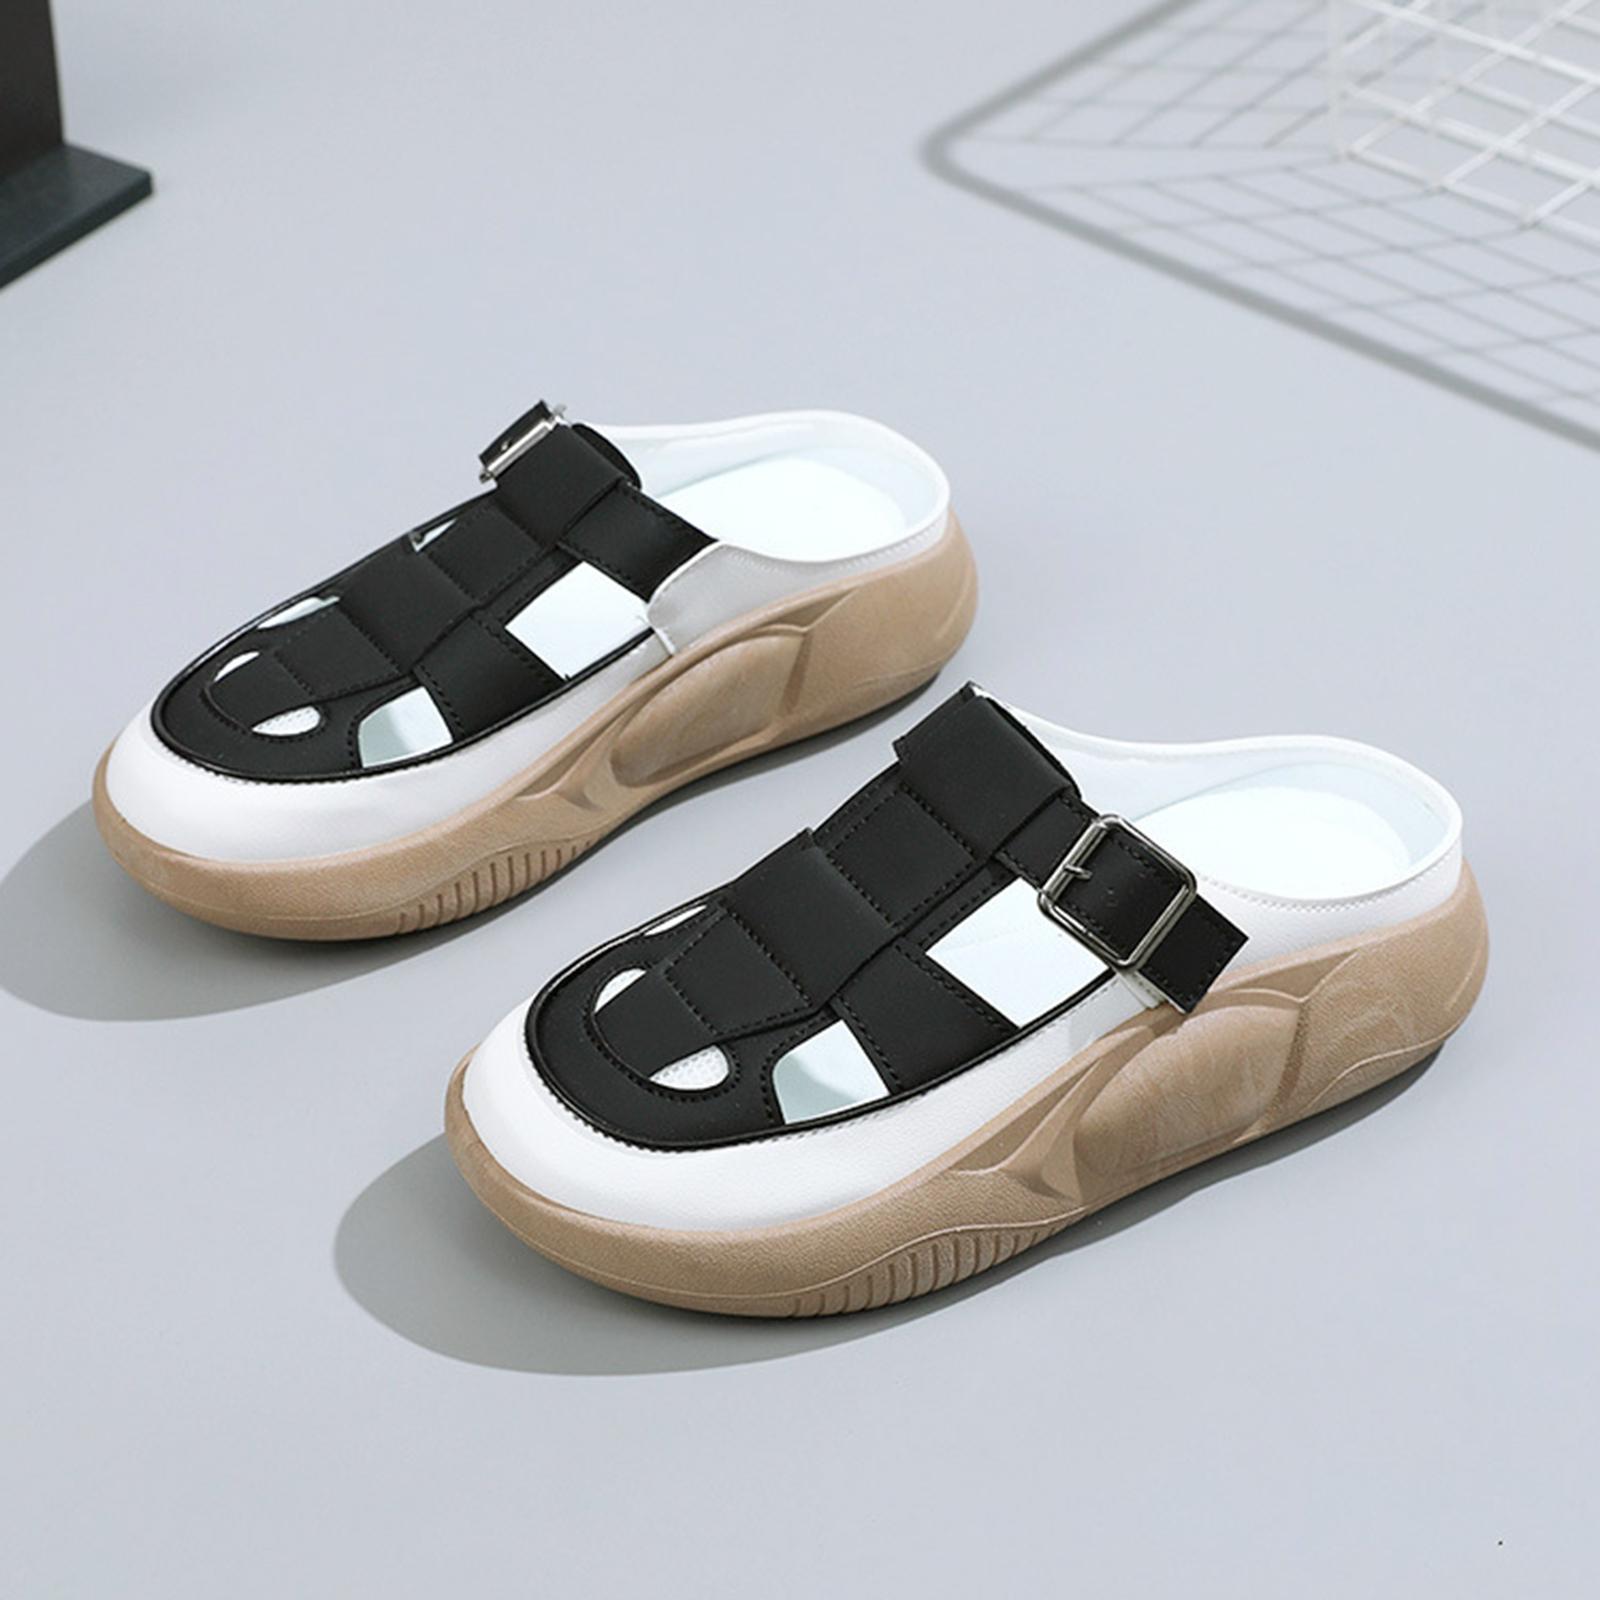 Women's Slide Sandals Comfortable Flat Shoes 5cm Thick Sole Nonslip Slippers Black 40